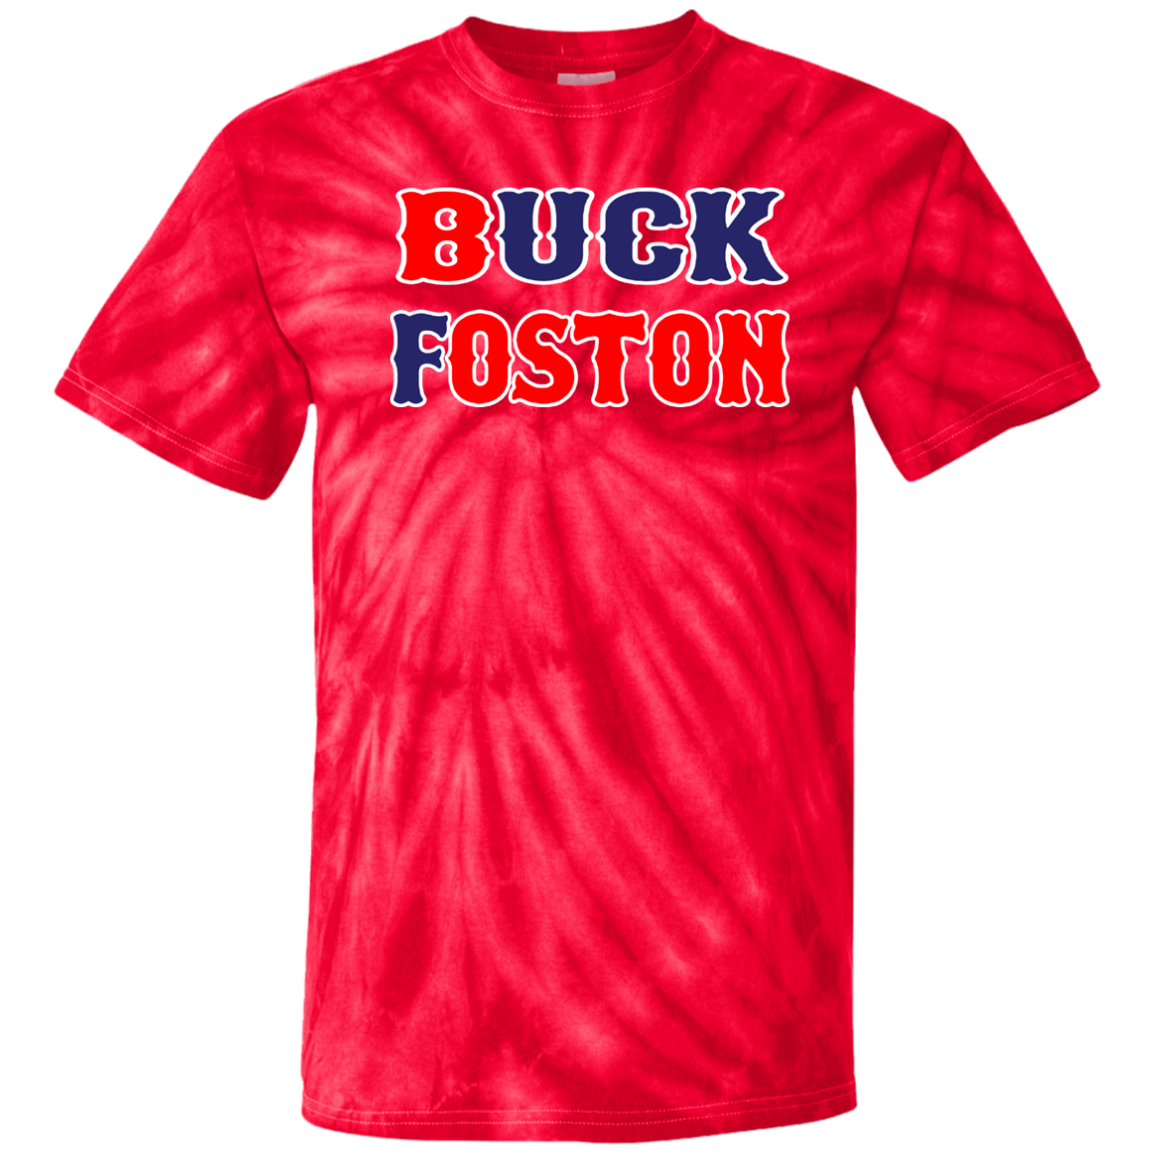 ArtichokeUSA Custom Design. BUCK FOSTON. 100% Cotton Tie Dye T-Shirt